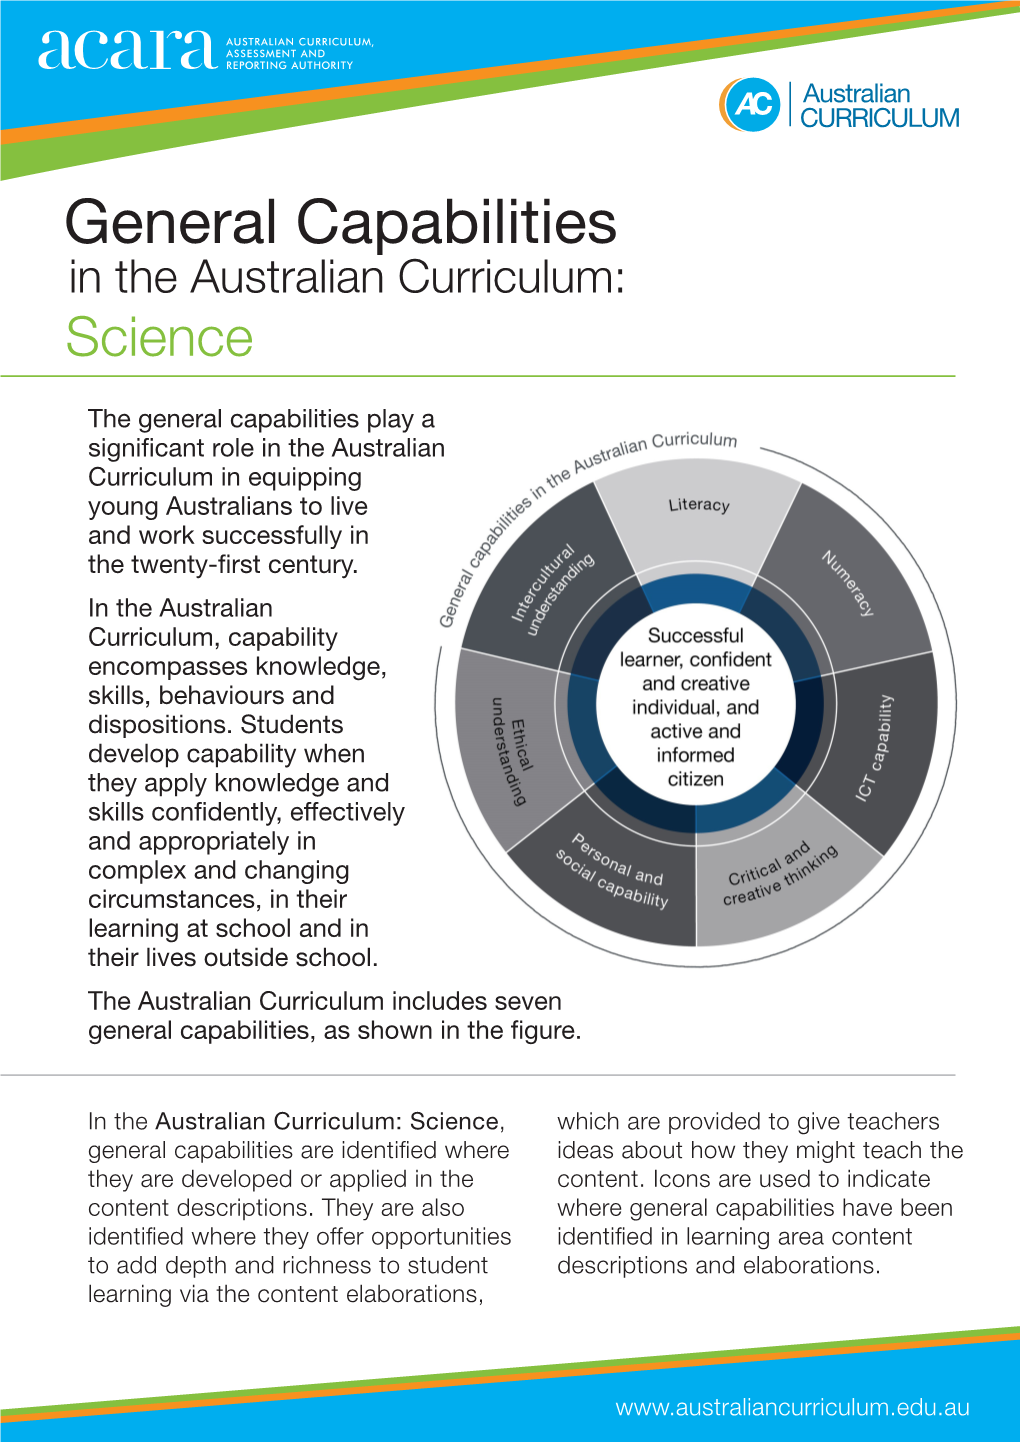 General Capabilities in the Australian Curriculum: Science